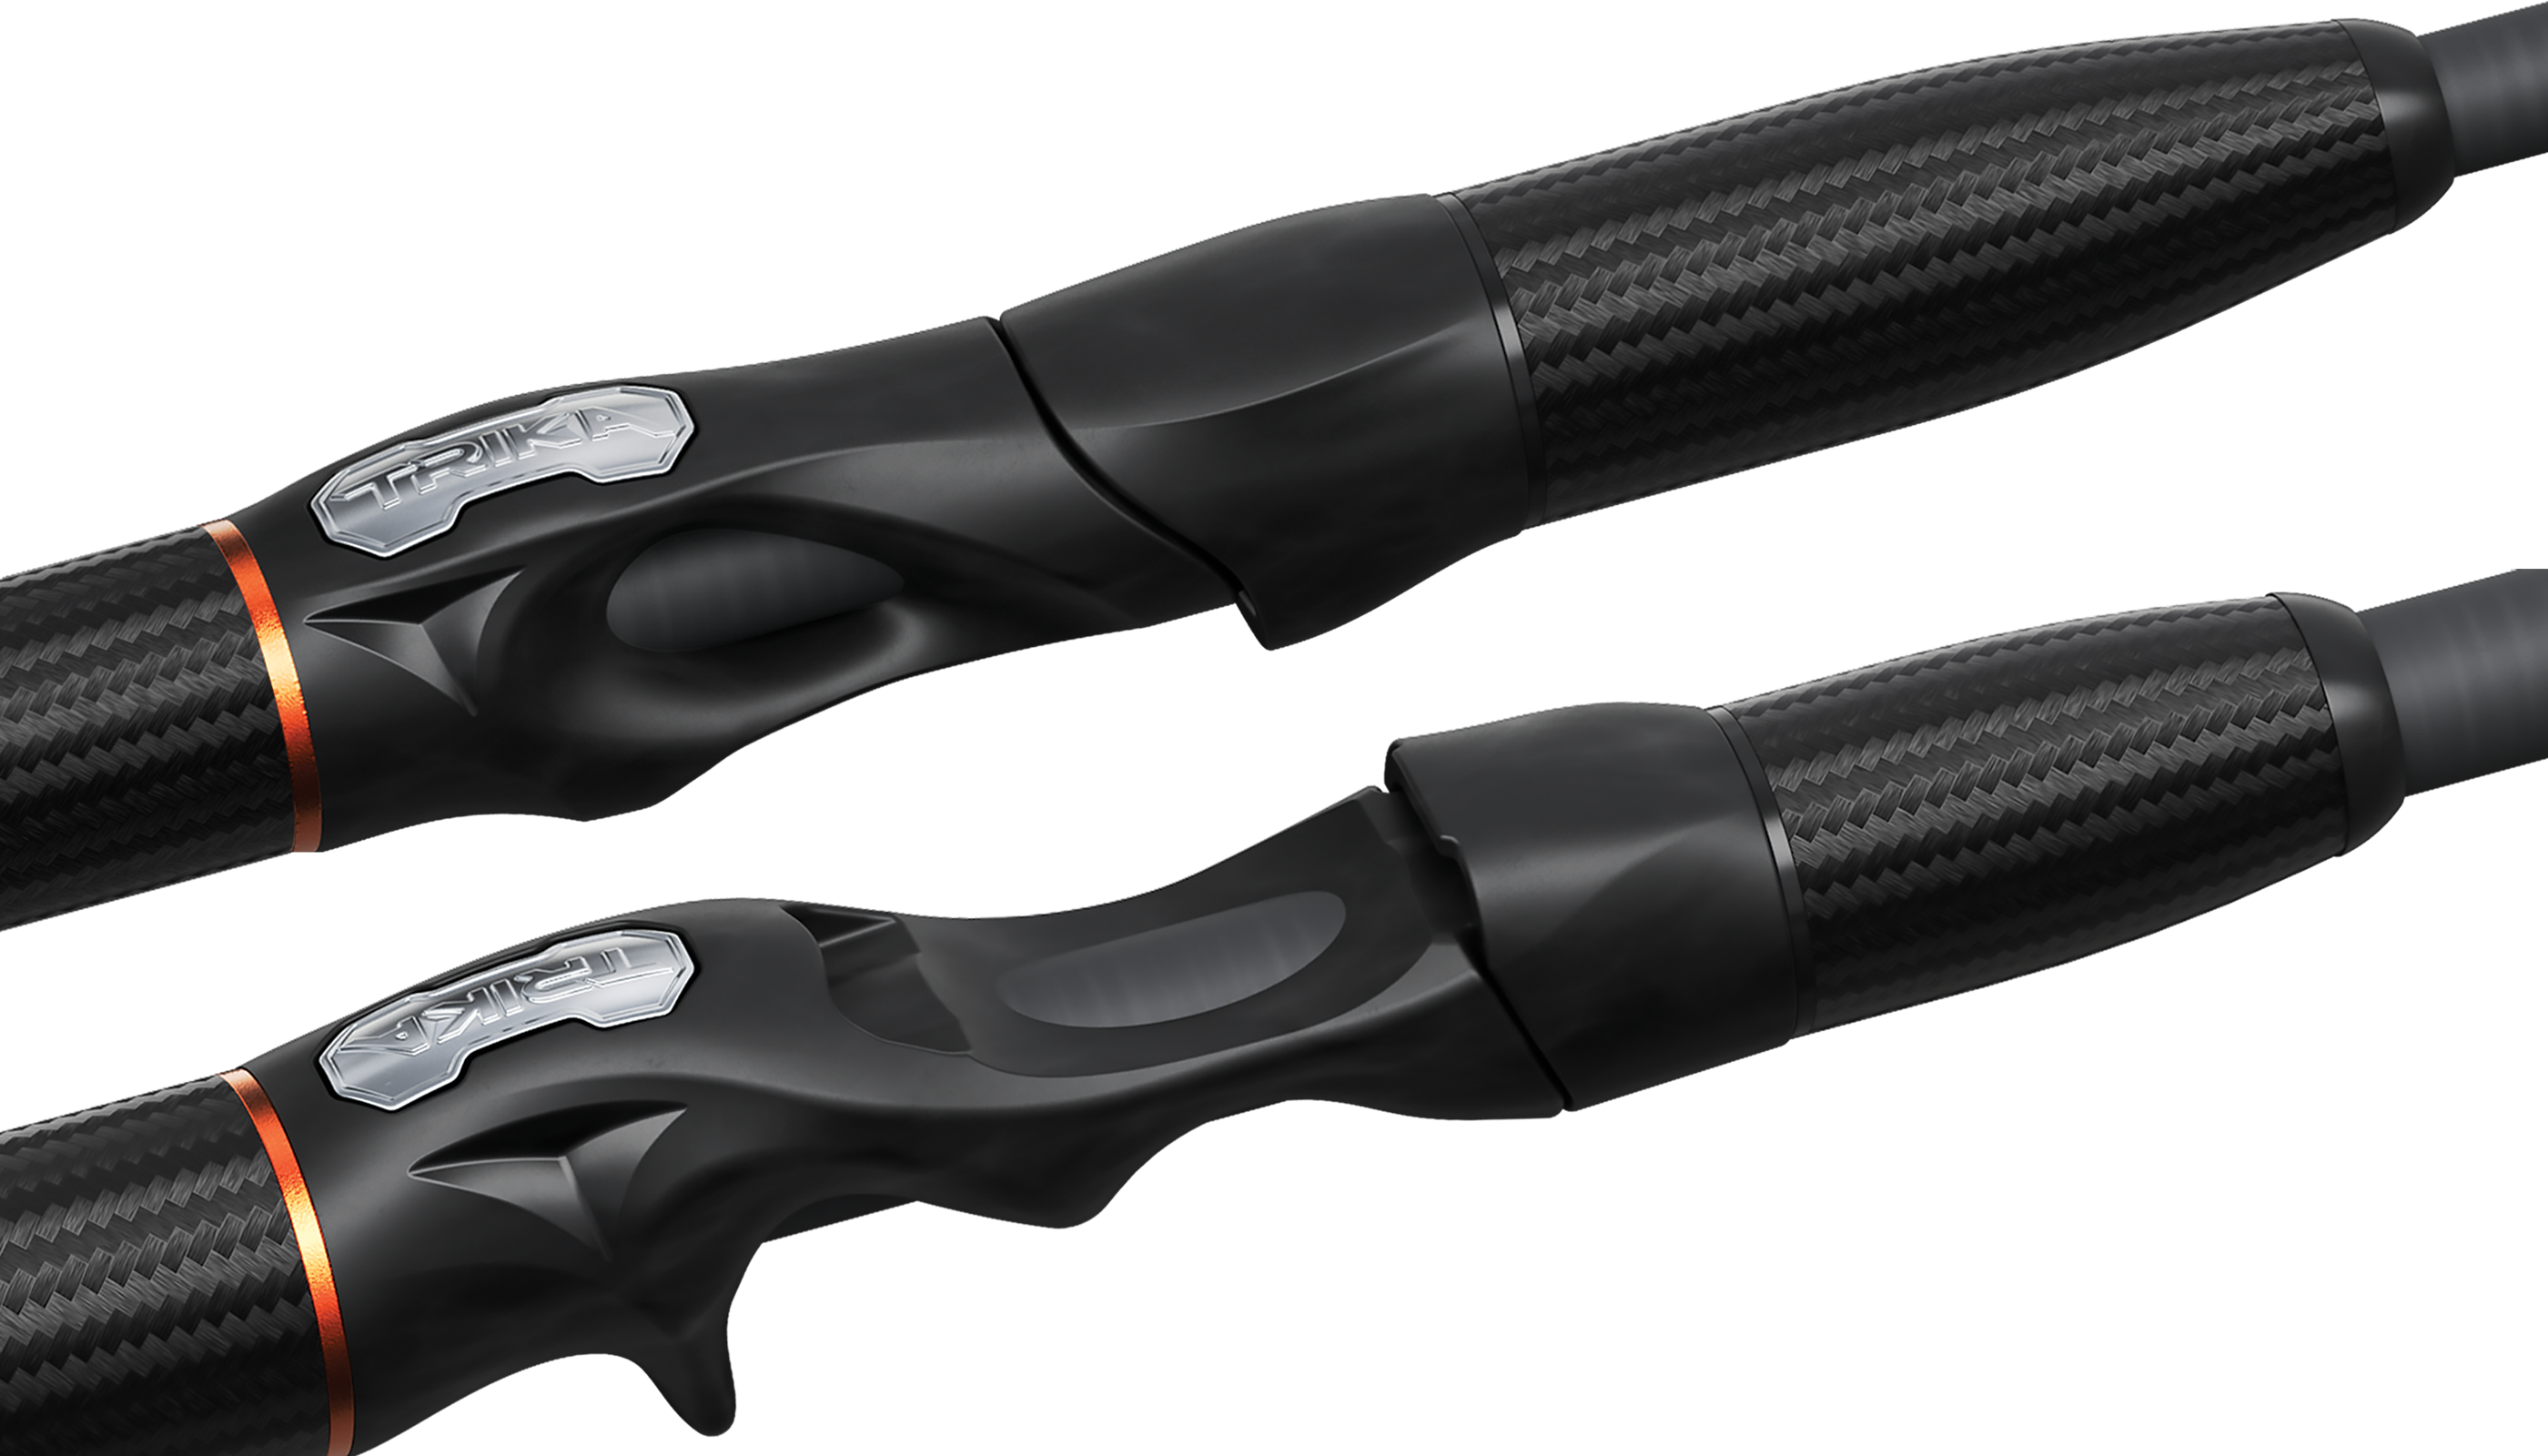  TRIKA 6X Casting Carbon Rod 7' [ Medium Heavy Power, Fast  Action] Carbon Weave Casting Rod for 2X Extra Sensitive Vibration, Longer  Casting